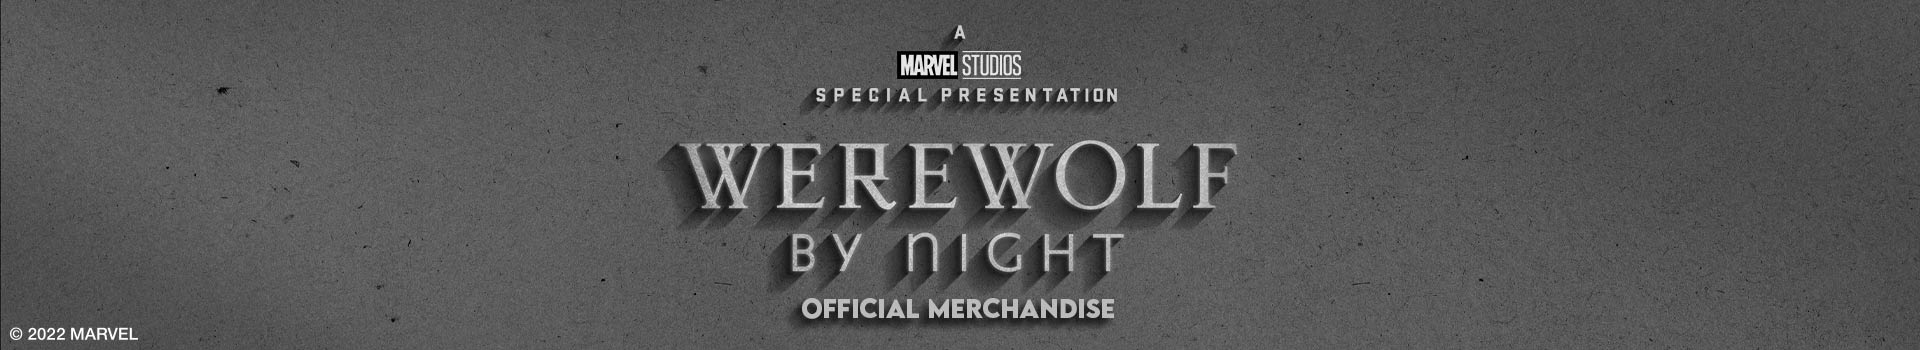 Werewolf By Night - Official Merchandise